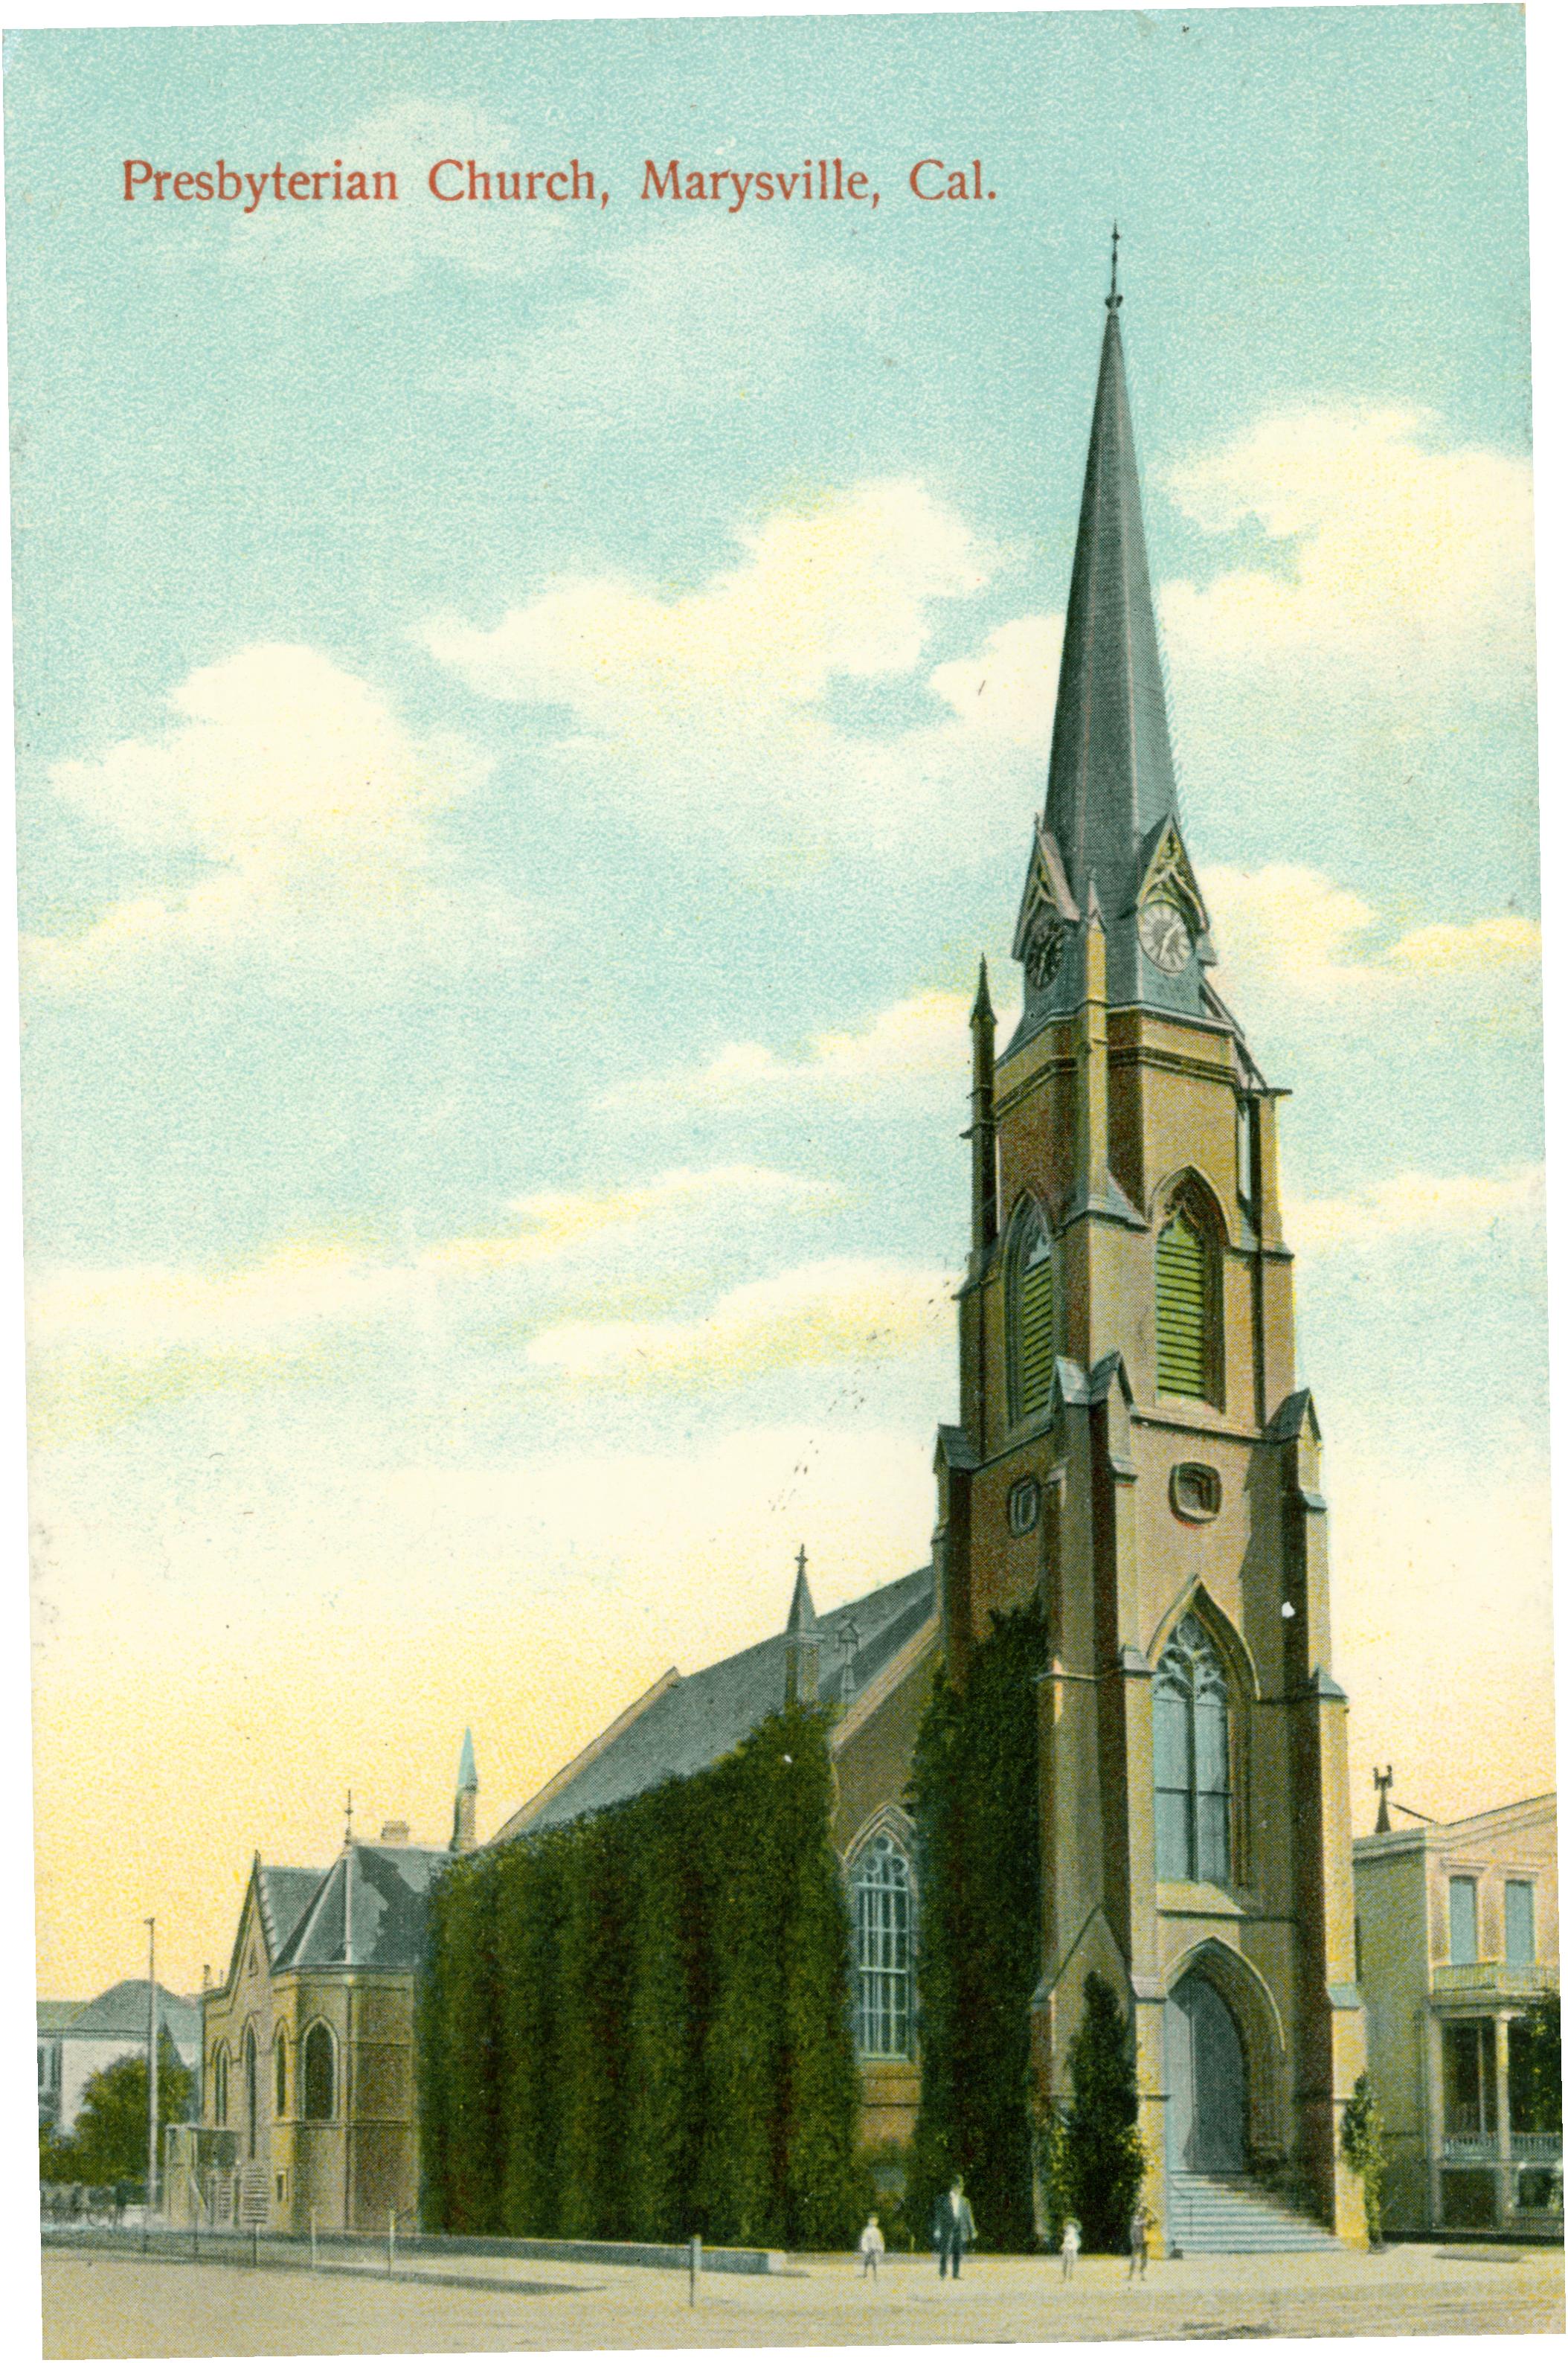 Shows a street view of the Marysville Presbyterian Church